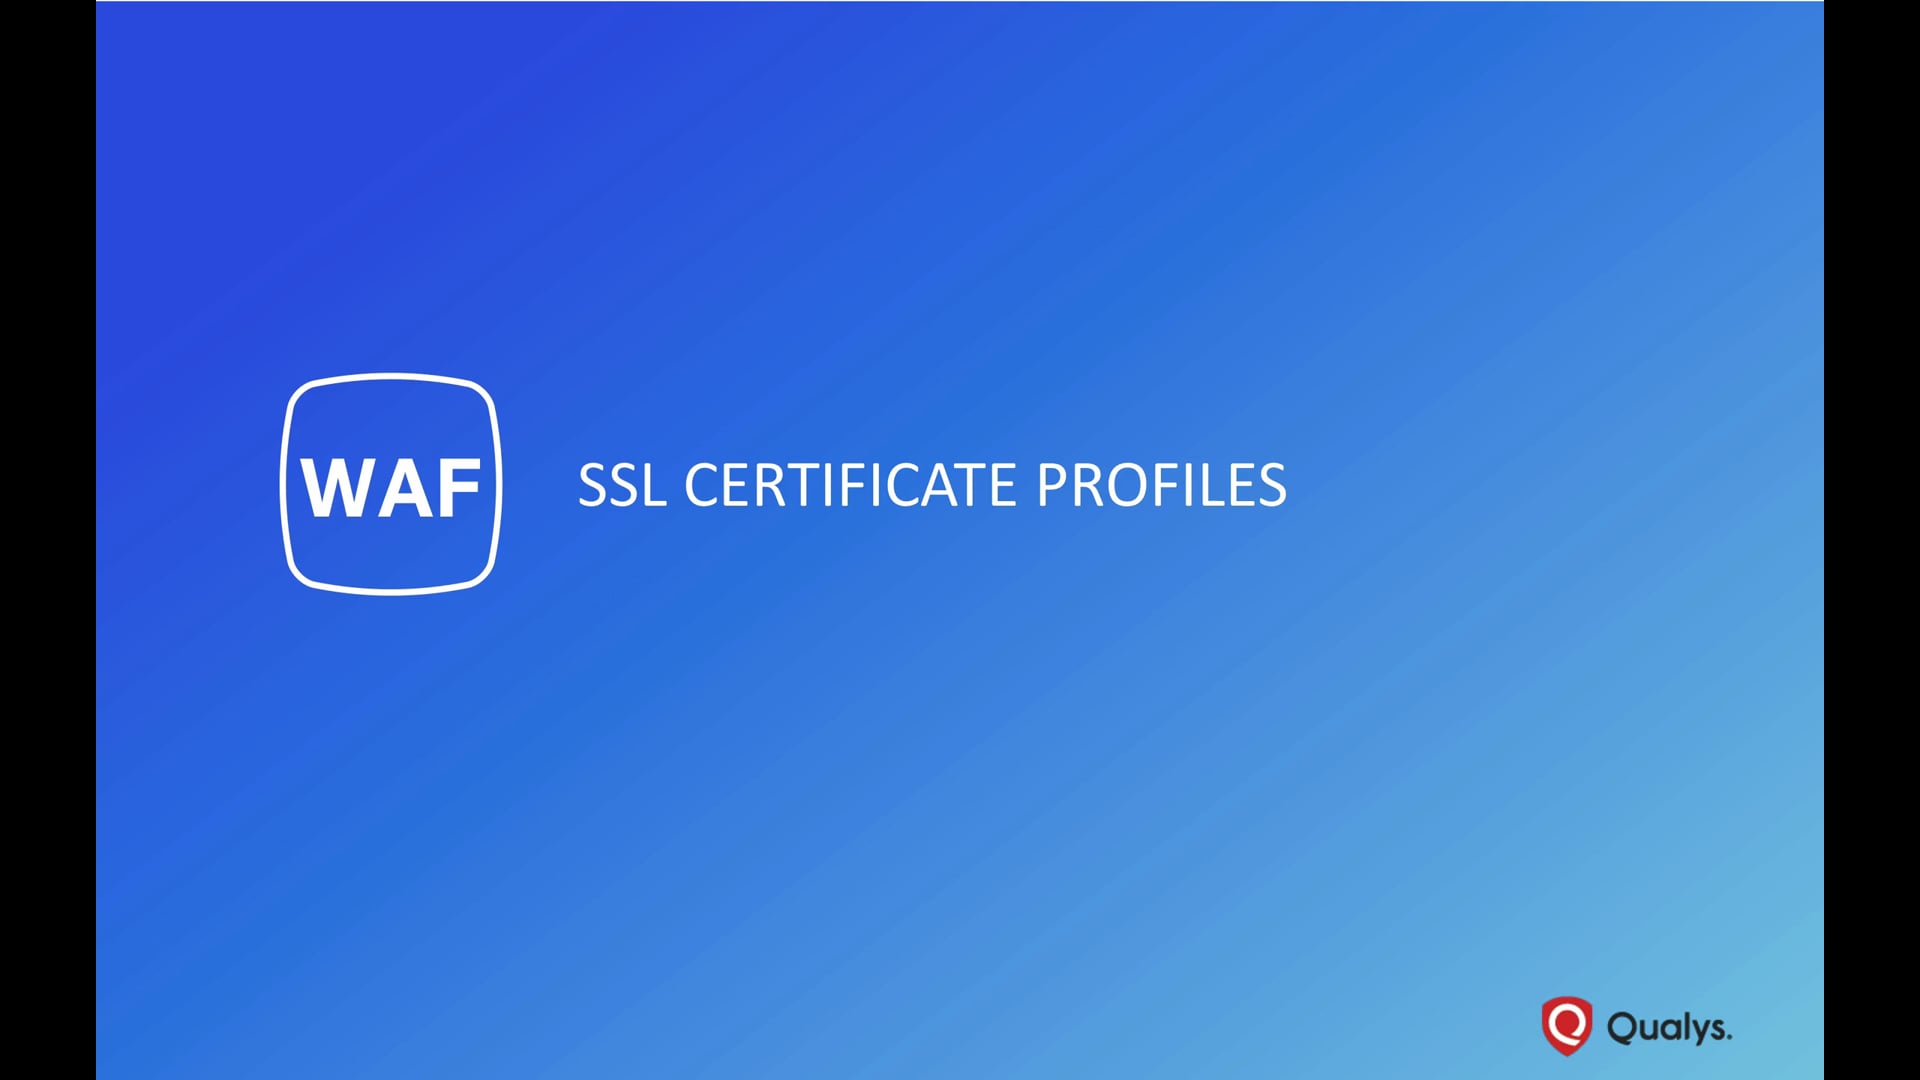 SSL Certificate Profiles